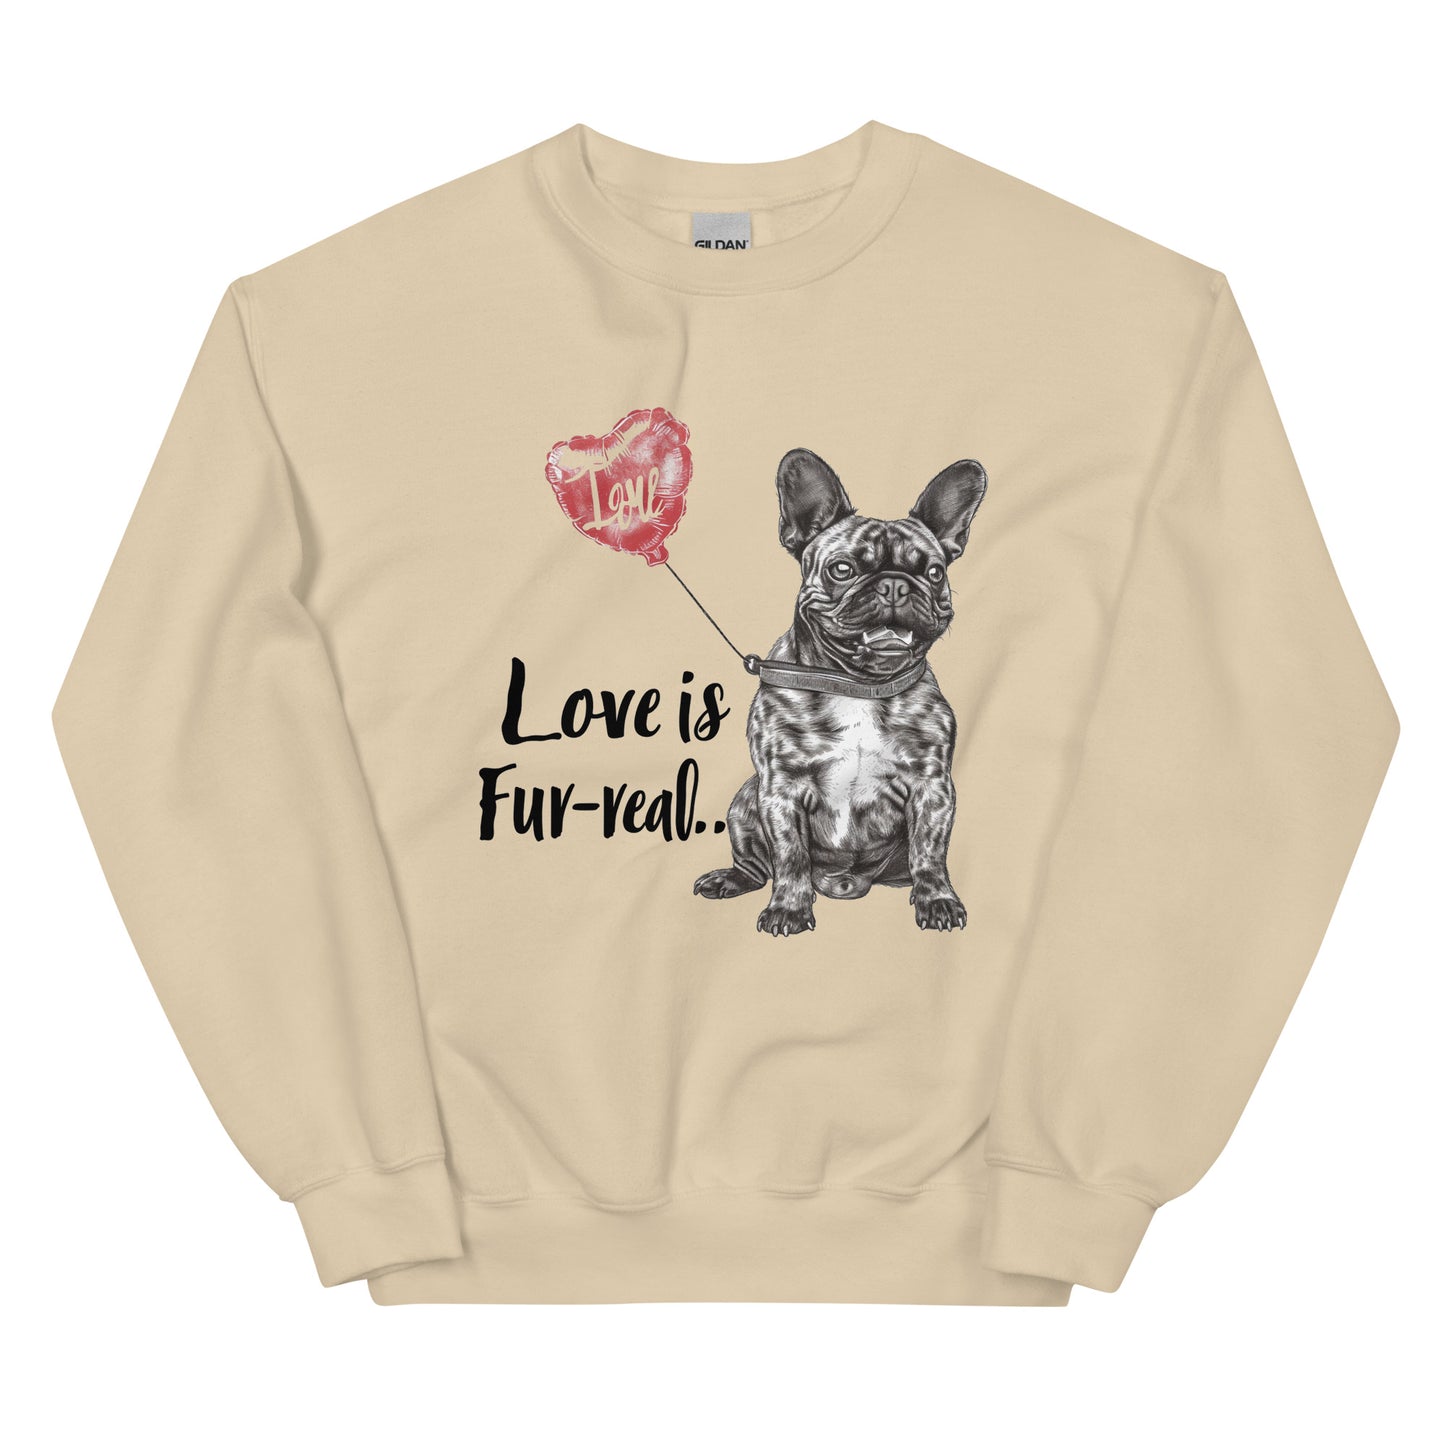 "Love is Fur-real" - Unisex Sweatshirt